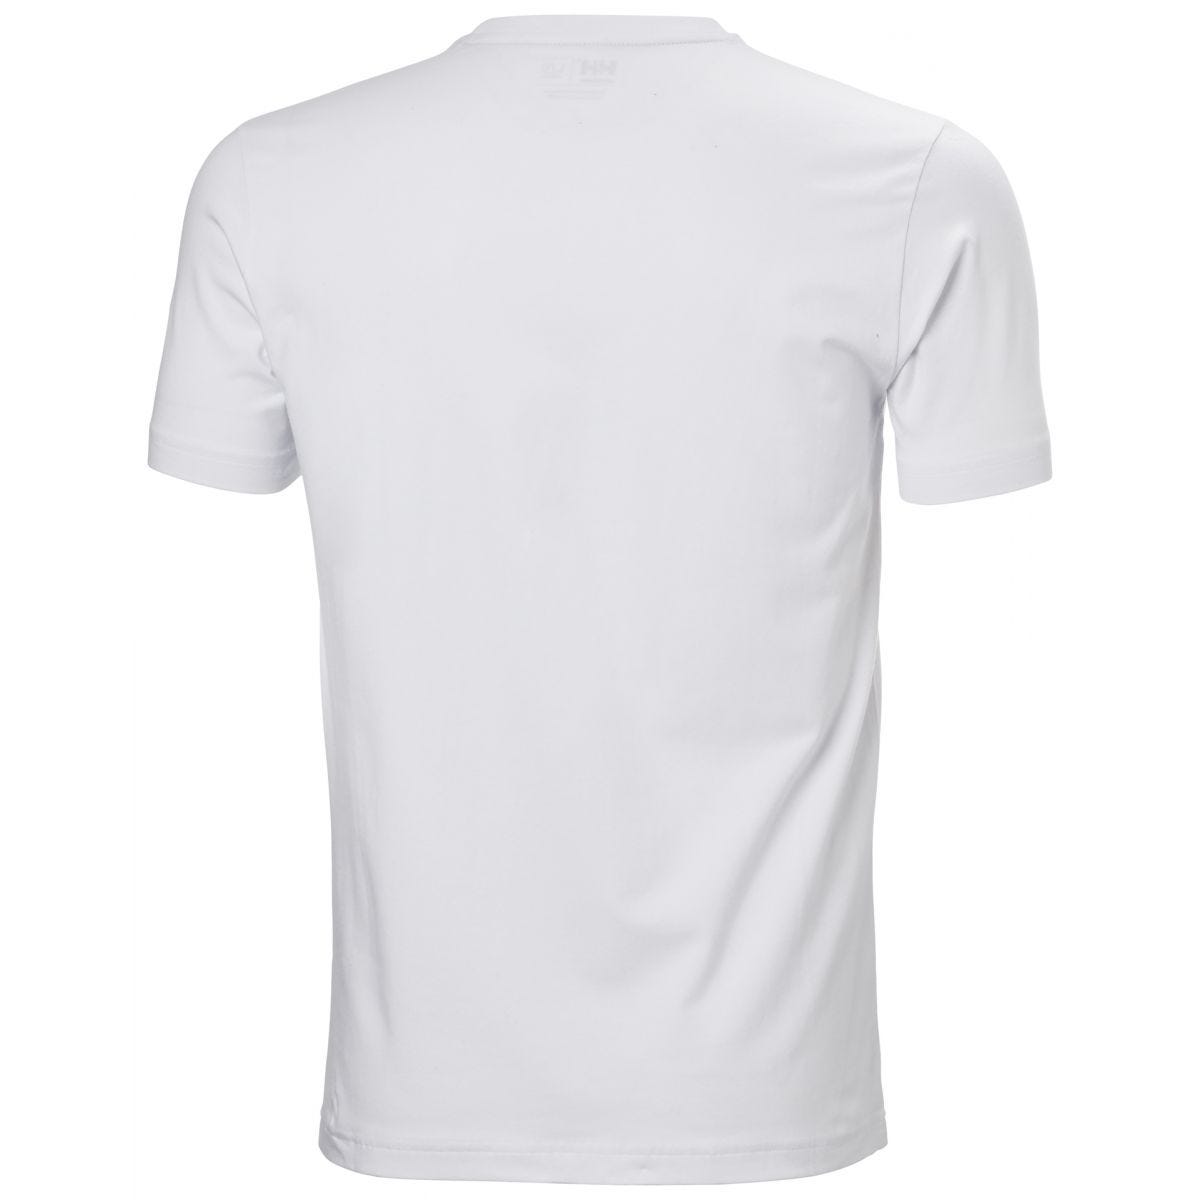 Tee-shirt Kensington Blanc - Helly Hansen - Taille L 1